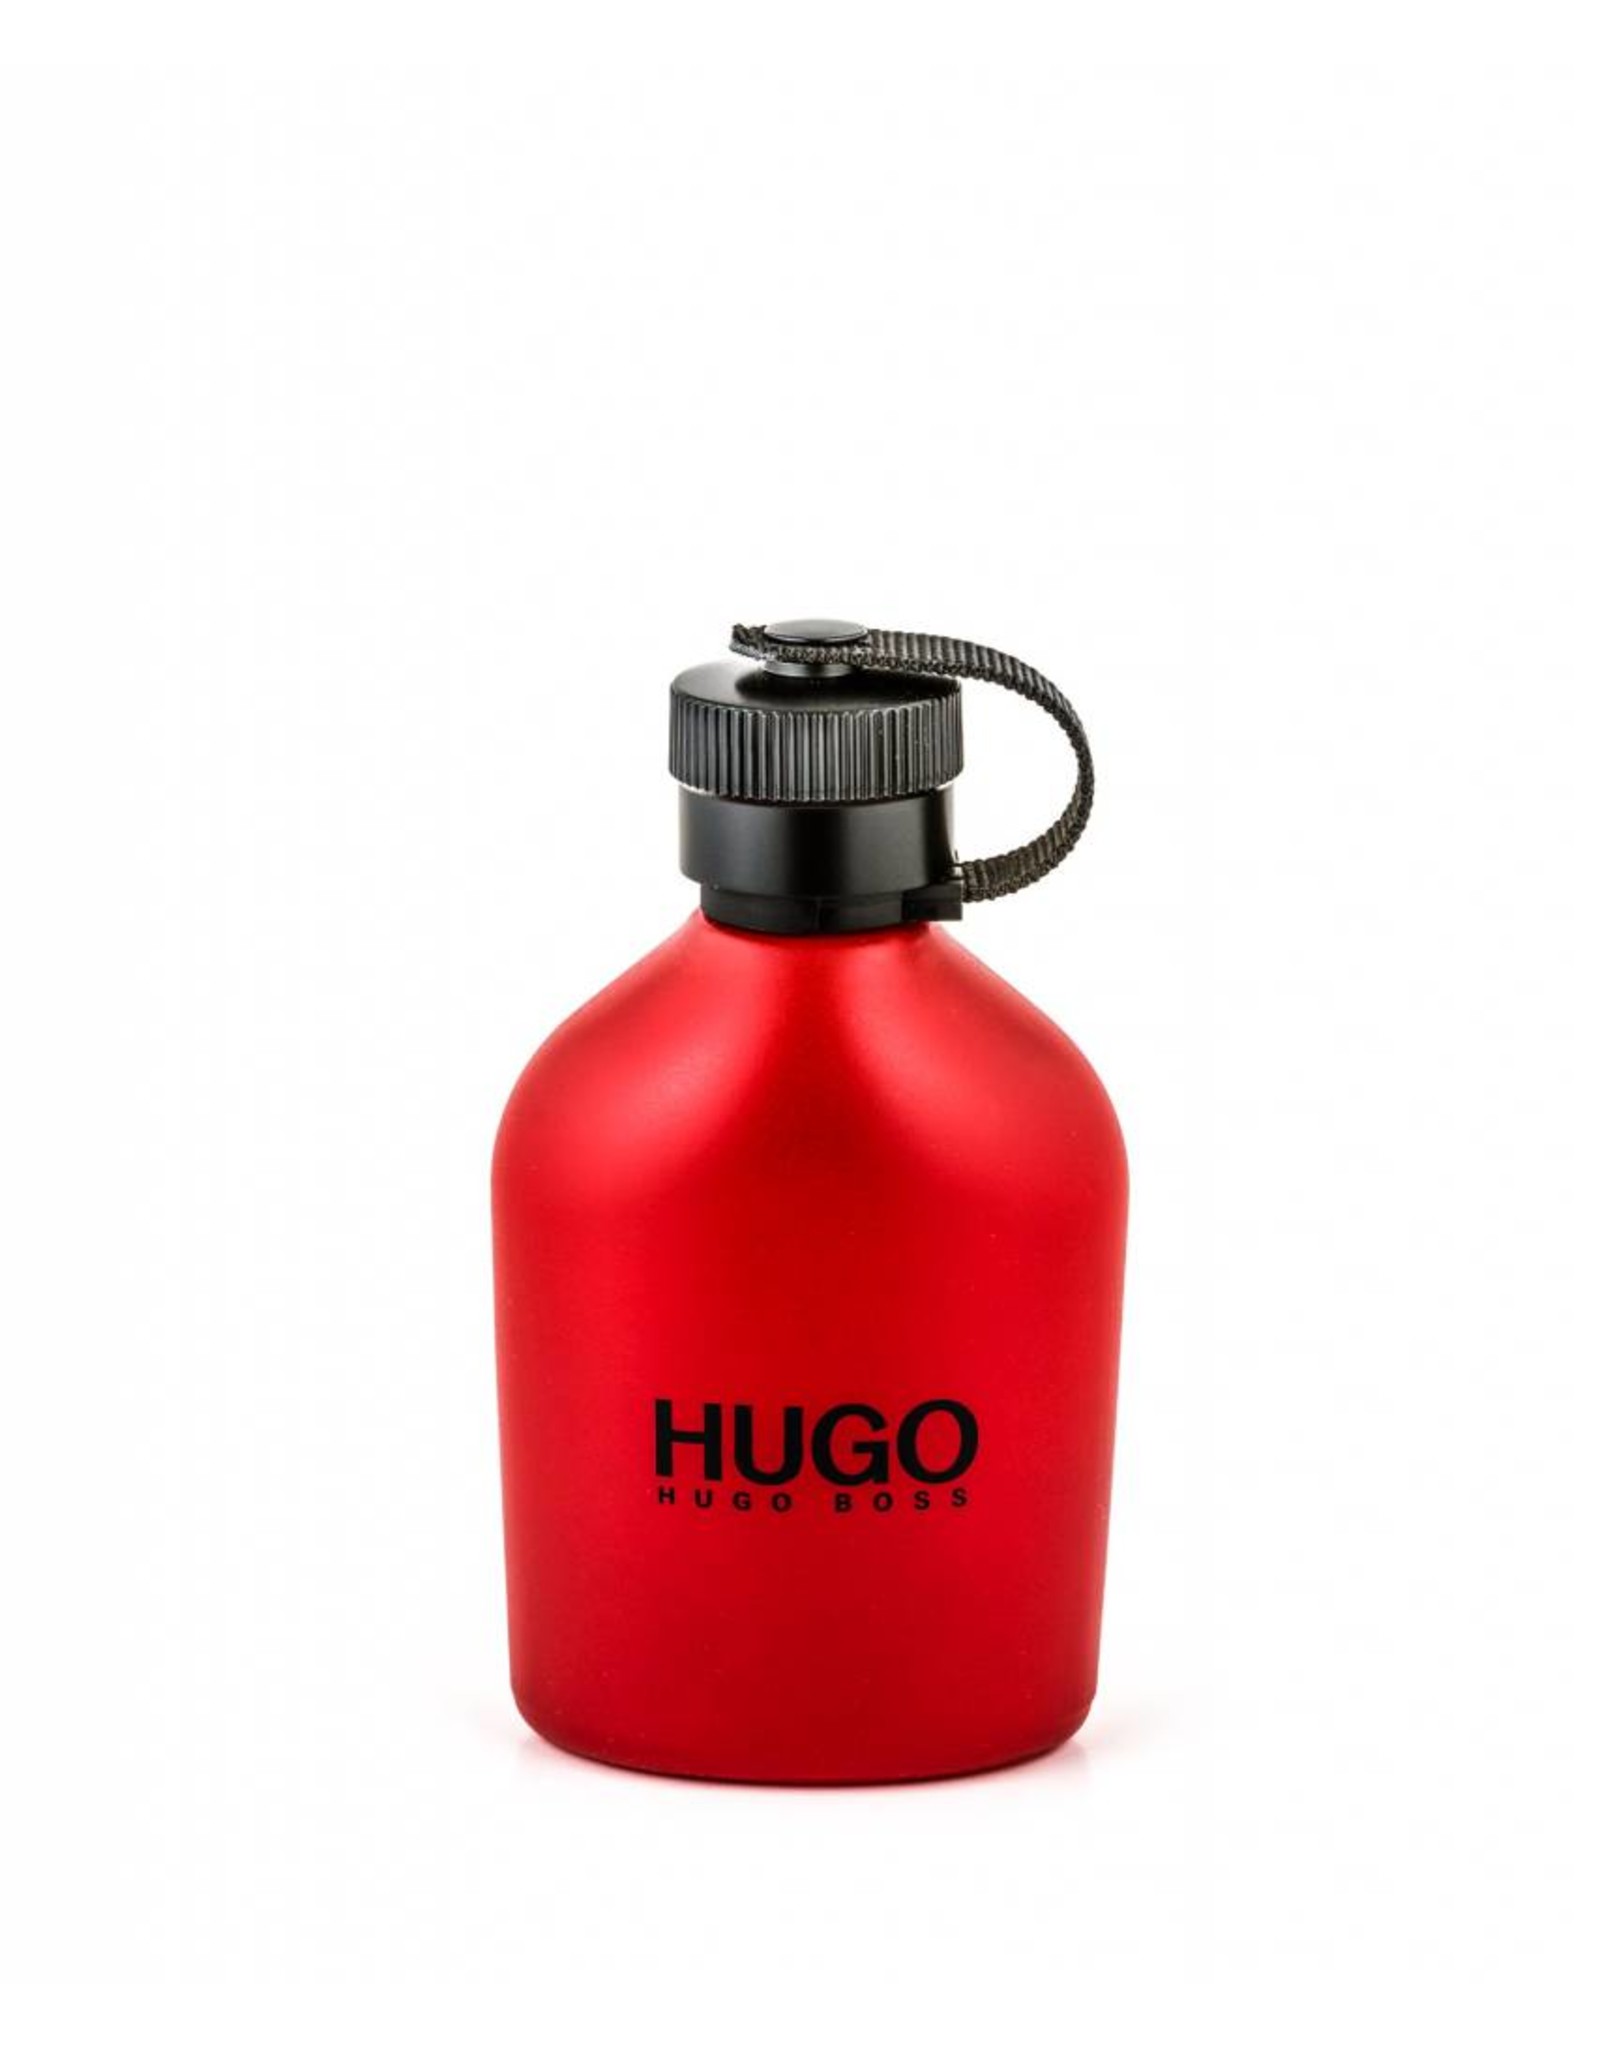 Хьюго босс ред. Hugo Boss "Hugo Red" EDT, 100ml. Hugo Boss Red для женщин. Hugo Boss Red для мужчин. Hugo Boss красный.